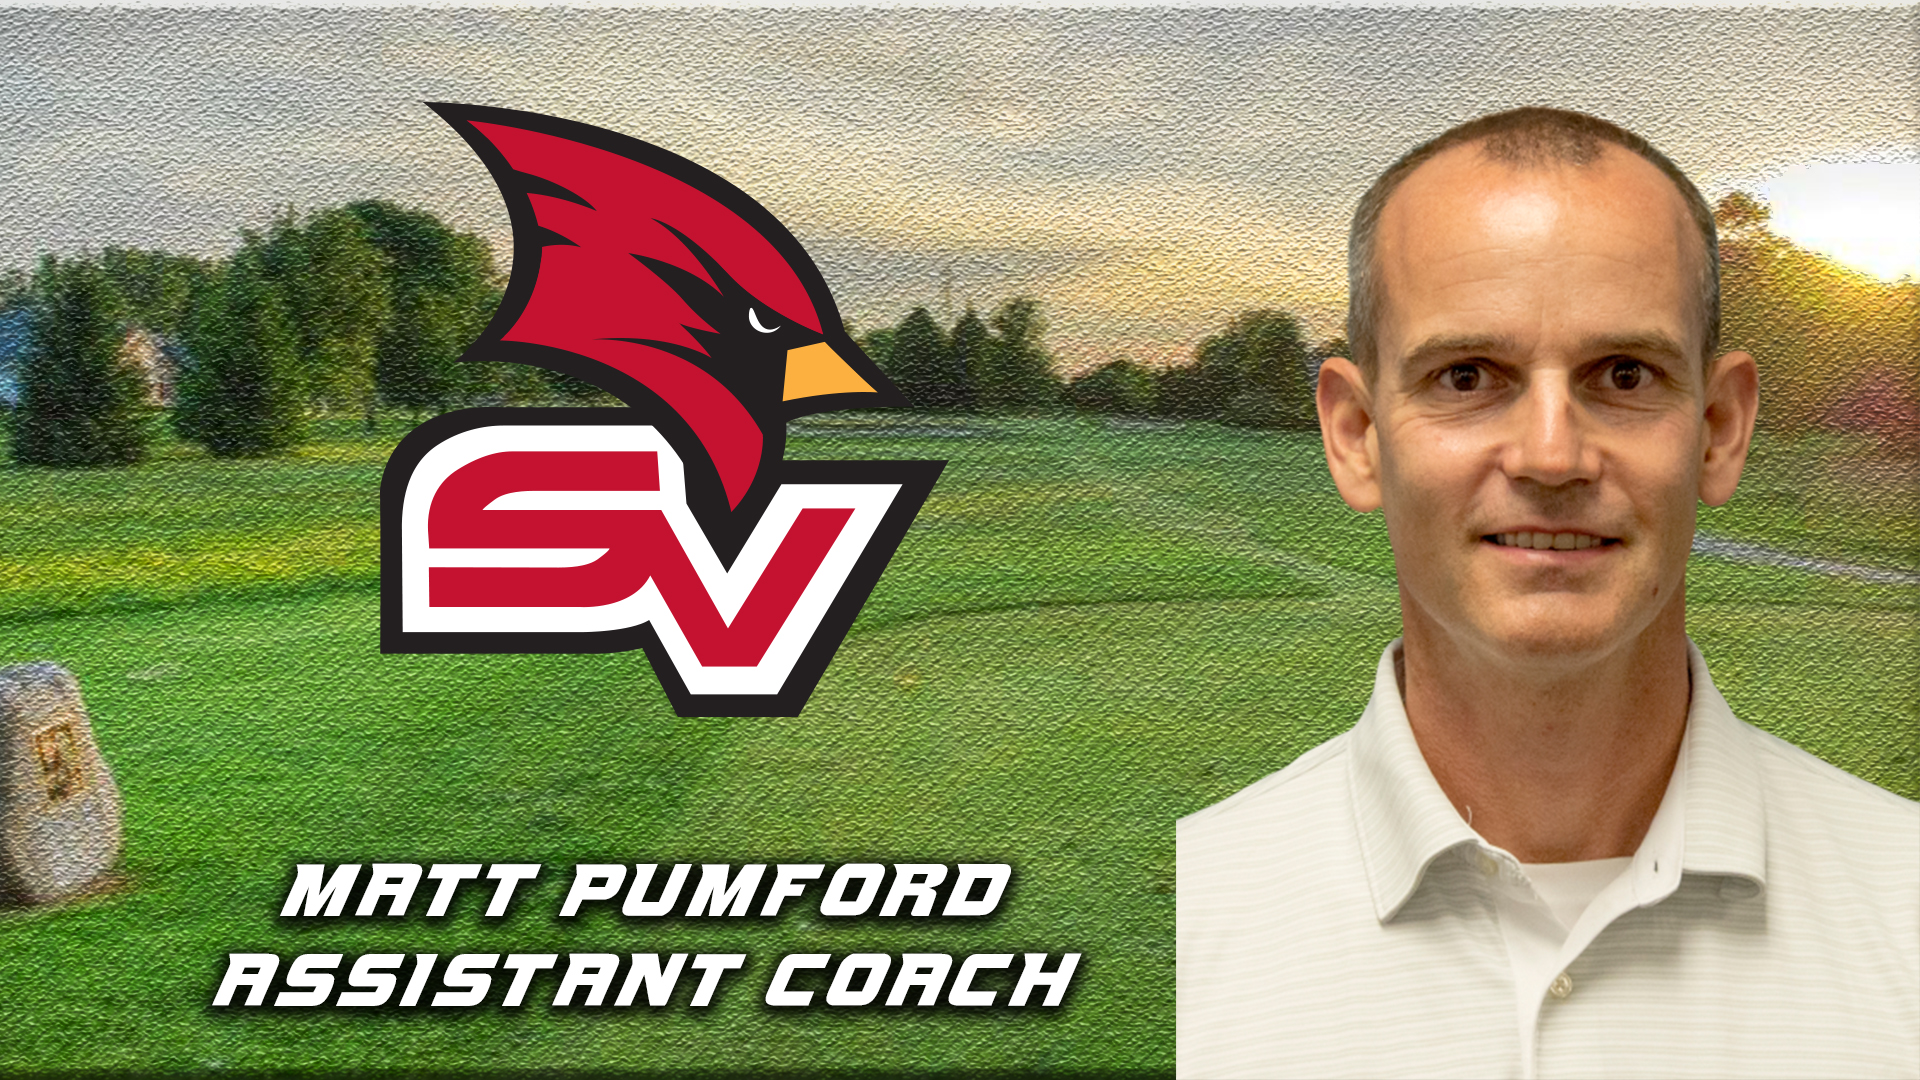 Matt Pumford joins SVSU Golf as Assistant Coach